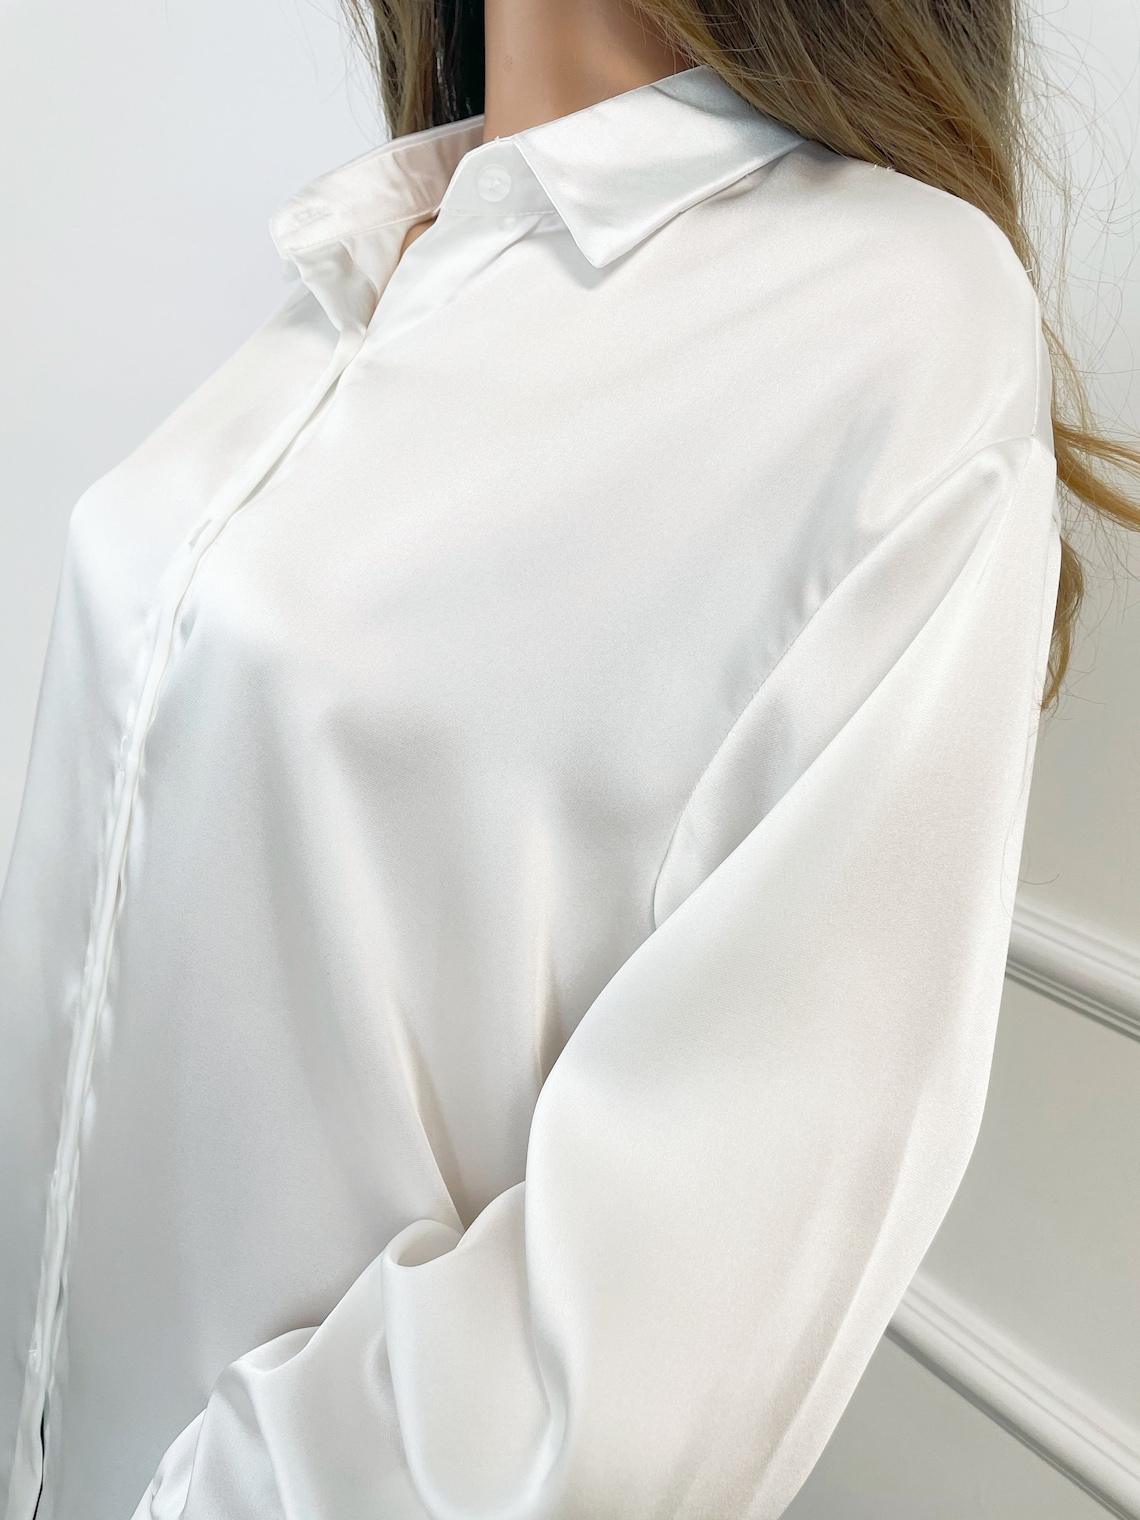 White Satin Soft Shirts Women Fashion Blouse Long Sleeve Tops Etsy